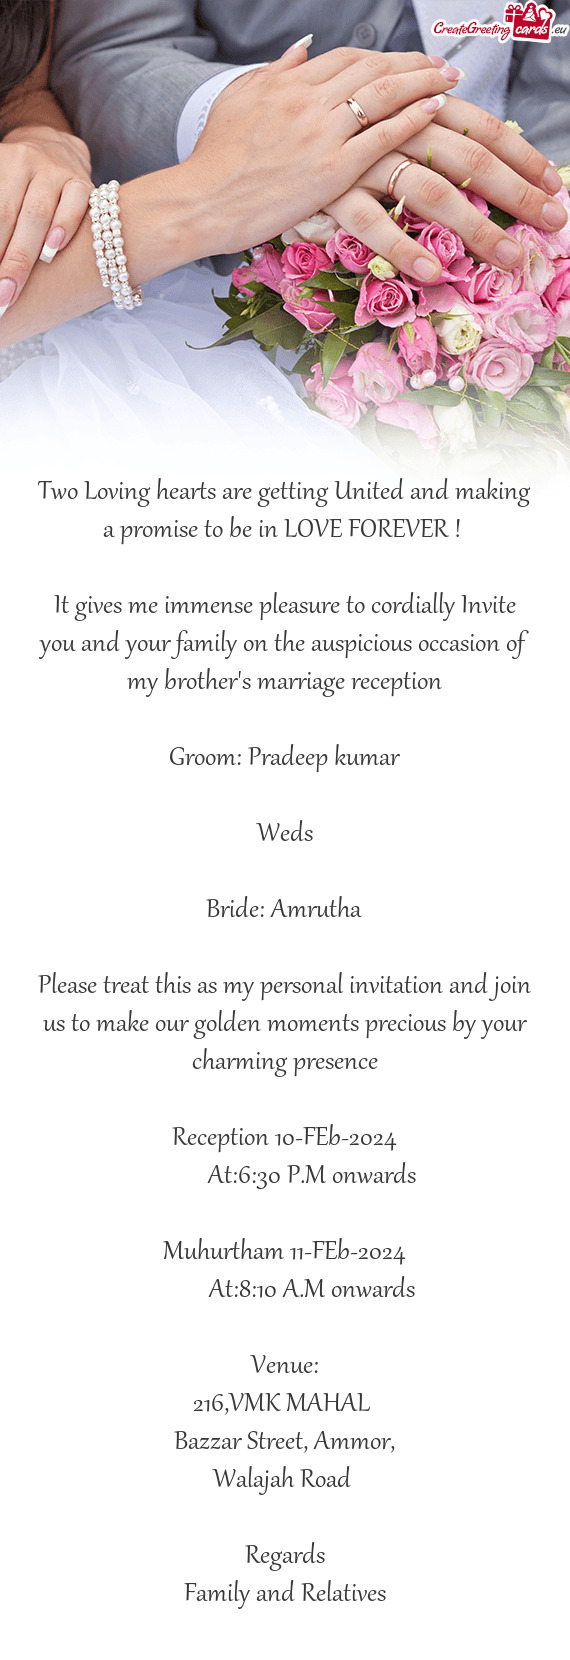 Bride: Amrutha